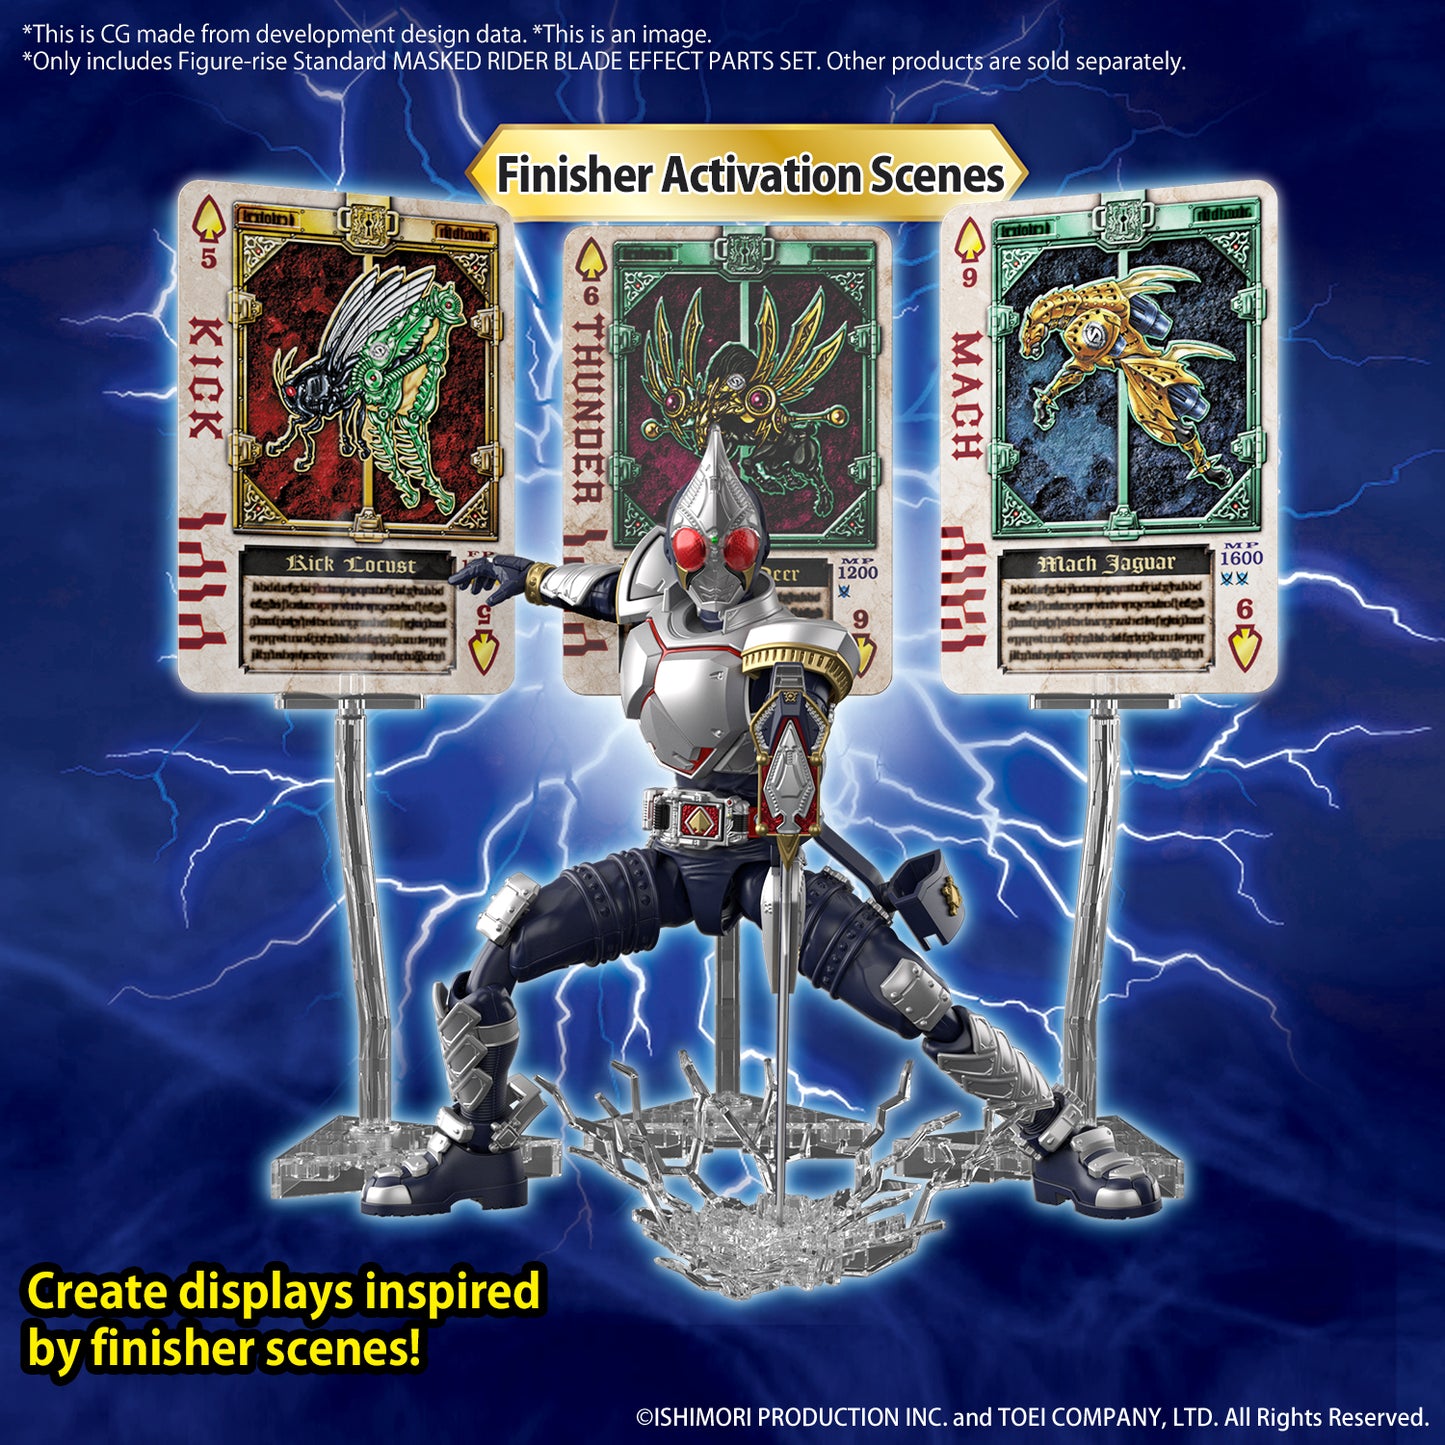 [PREORDER] Figure-Rise Standard Masked Rider Blade Effects Parts Set